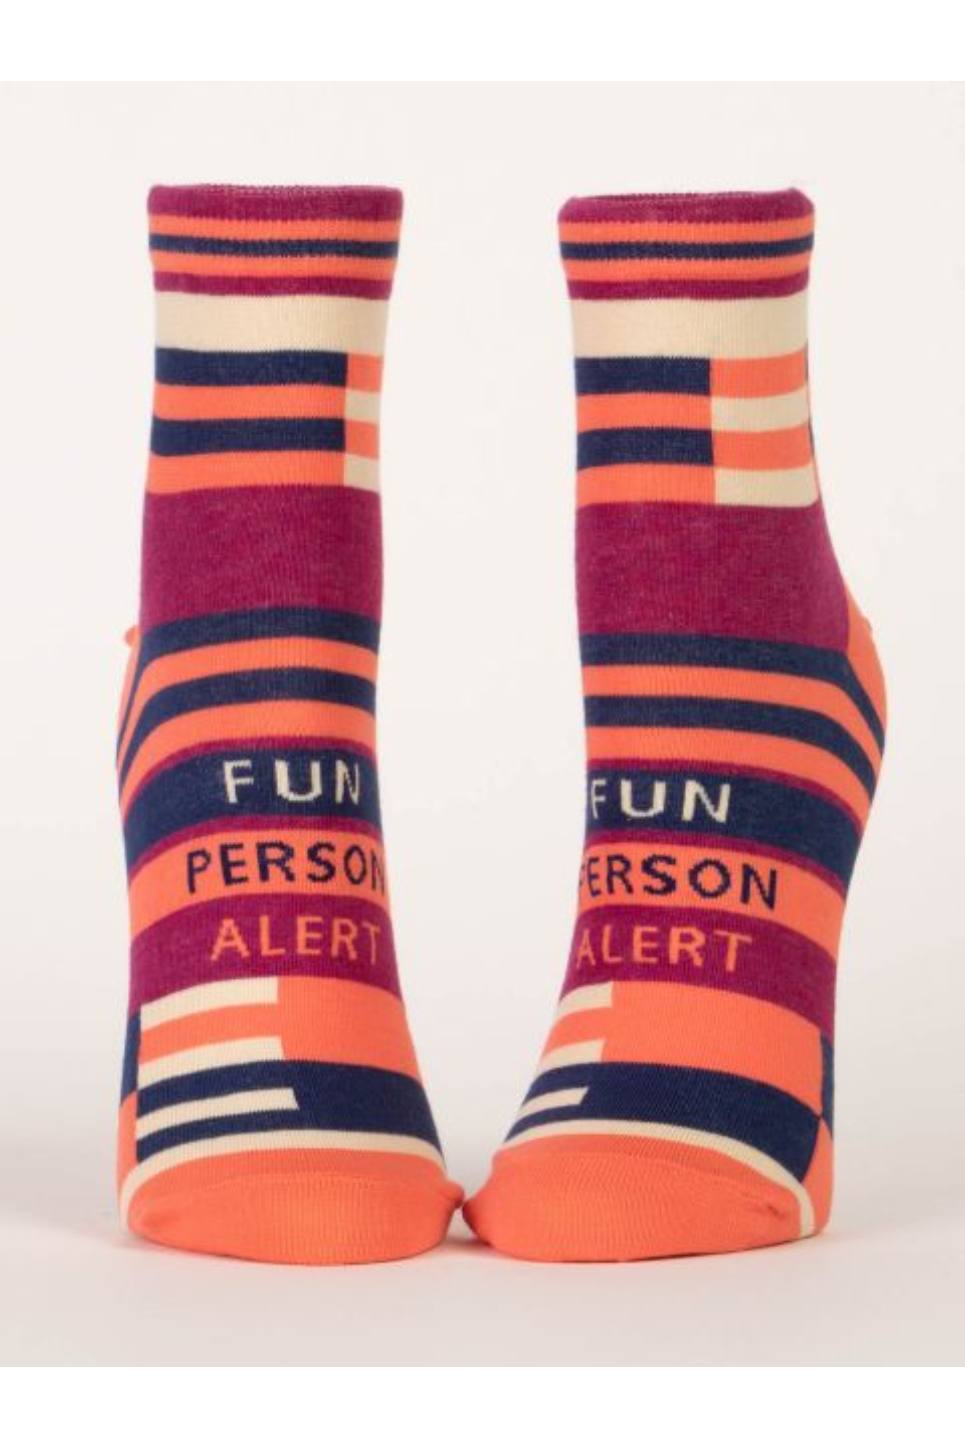 Fun Person Alert Women's Ankle Socks